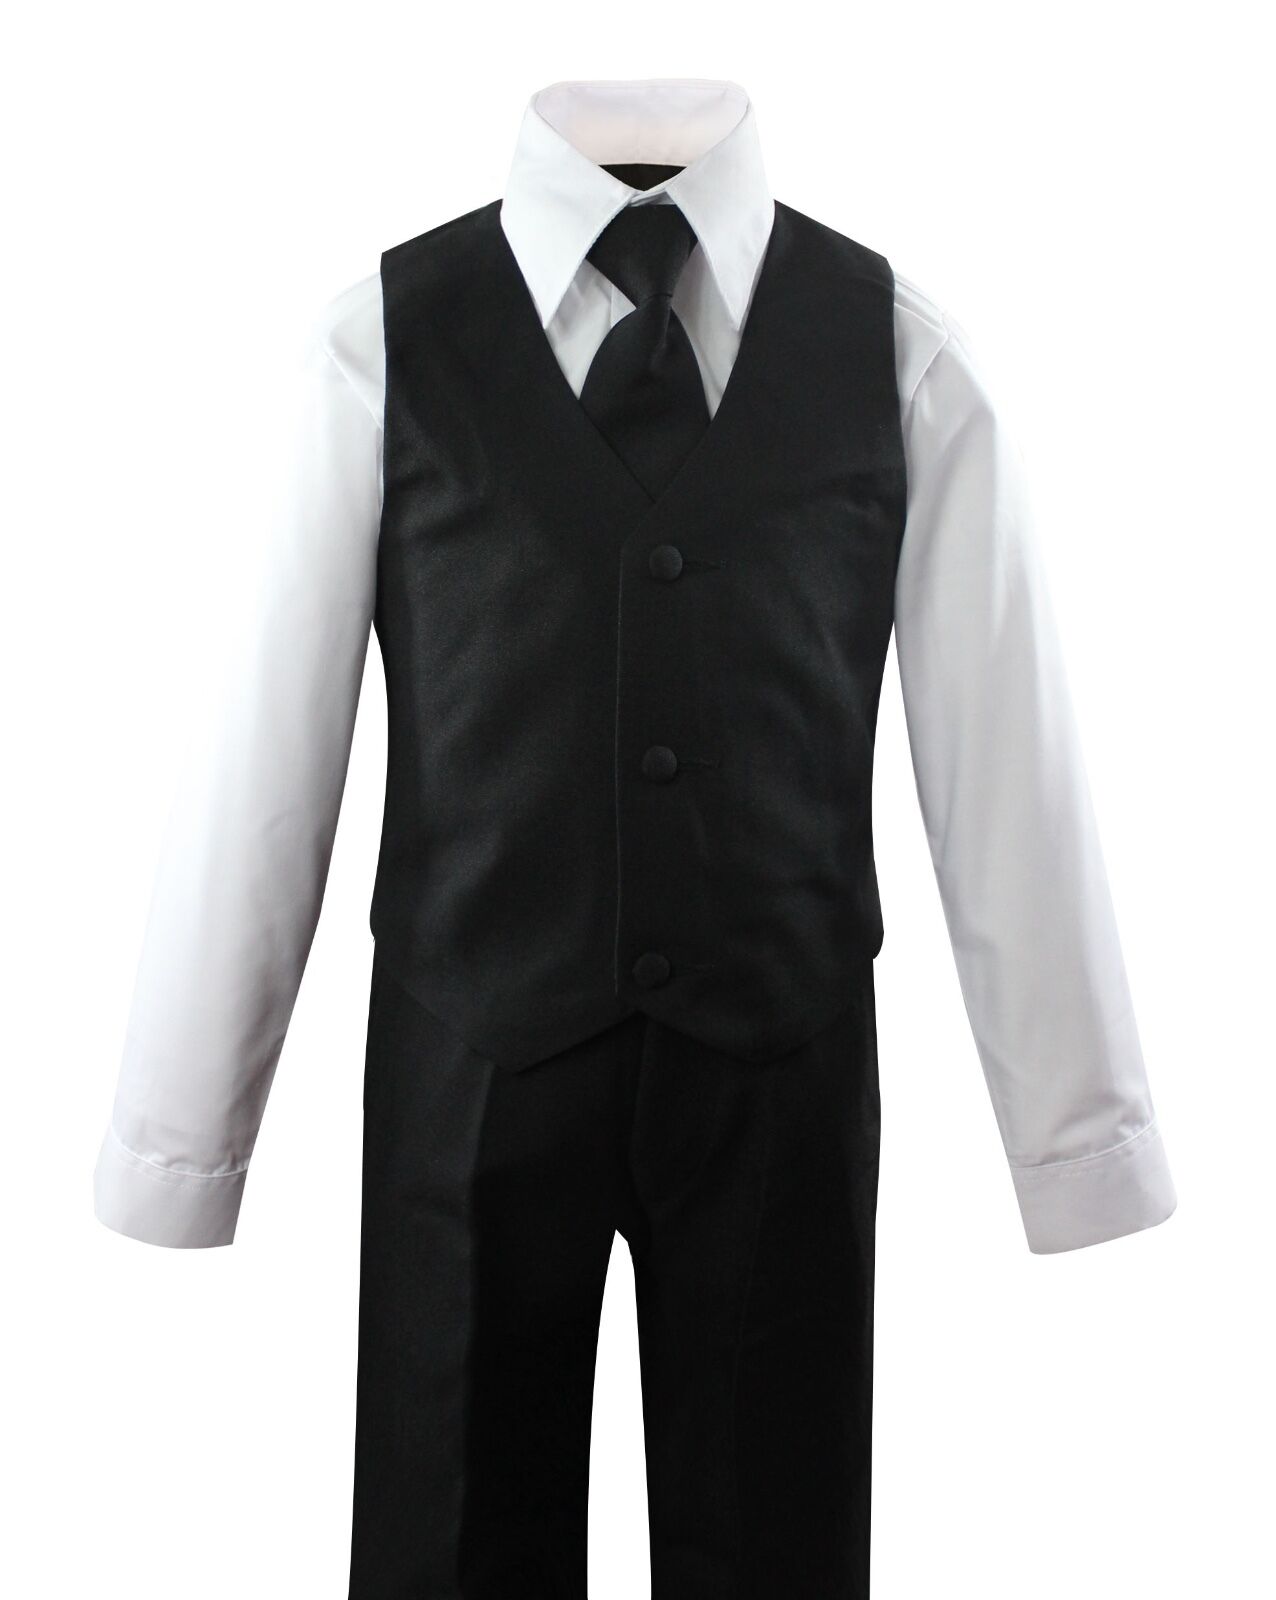 Boys Formal Black Suit 5 Pieces Set Toddler Size 2T to 14 Без бренда - фотография #2